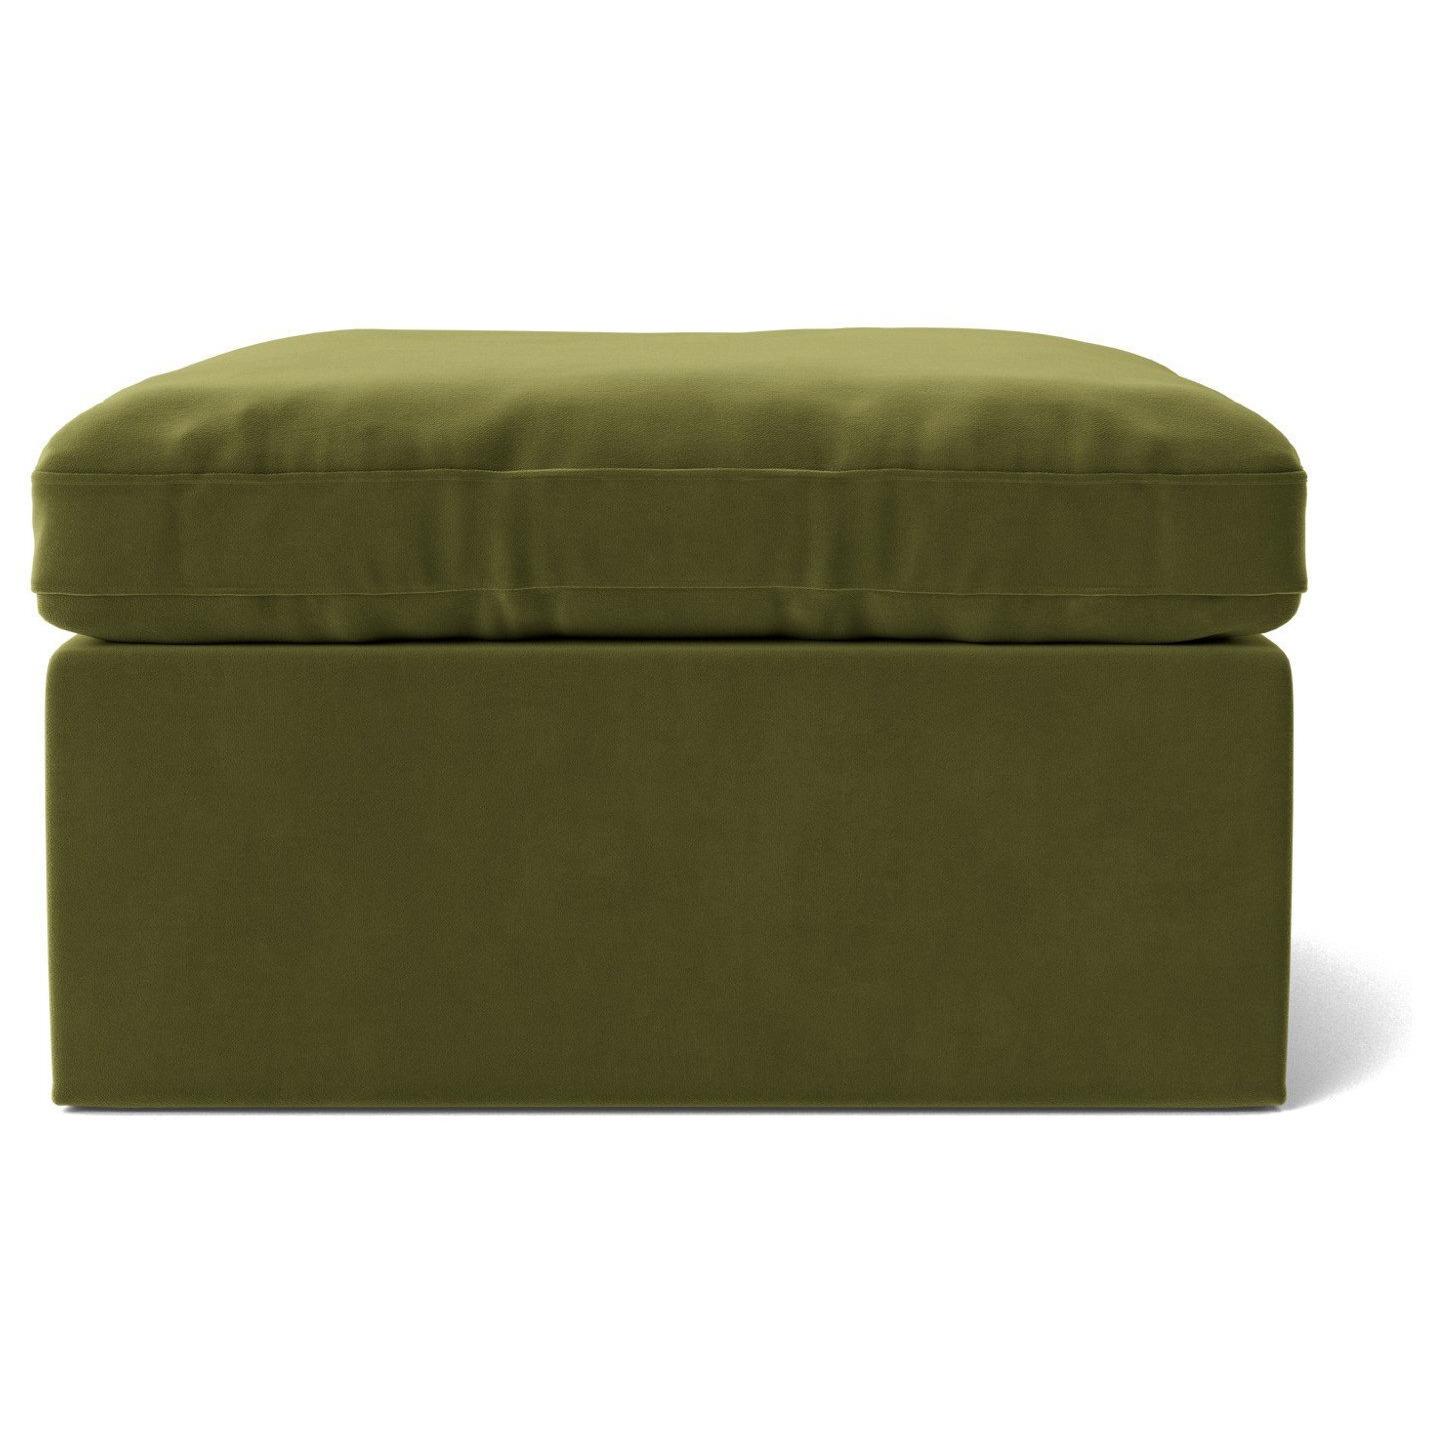 Swoon Seattle Velvet Ottoman Footstool - Fern Green - image 1